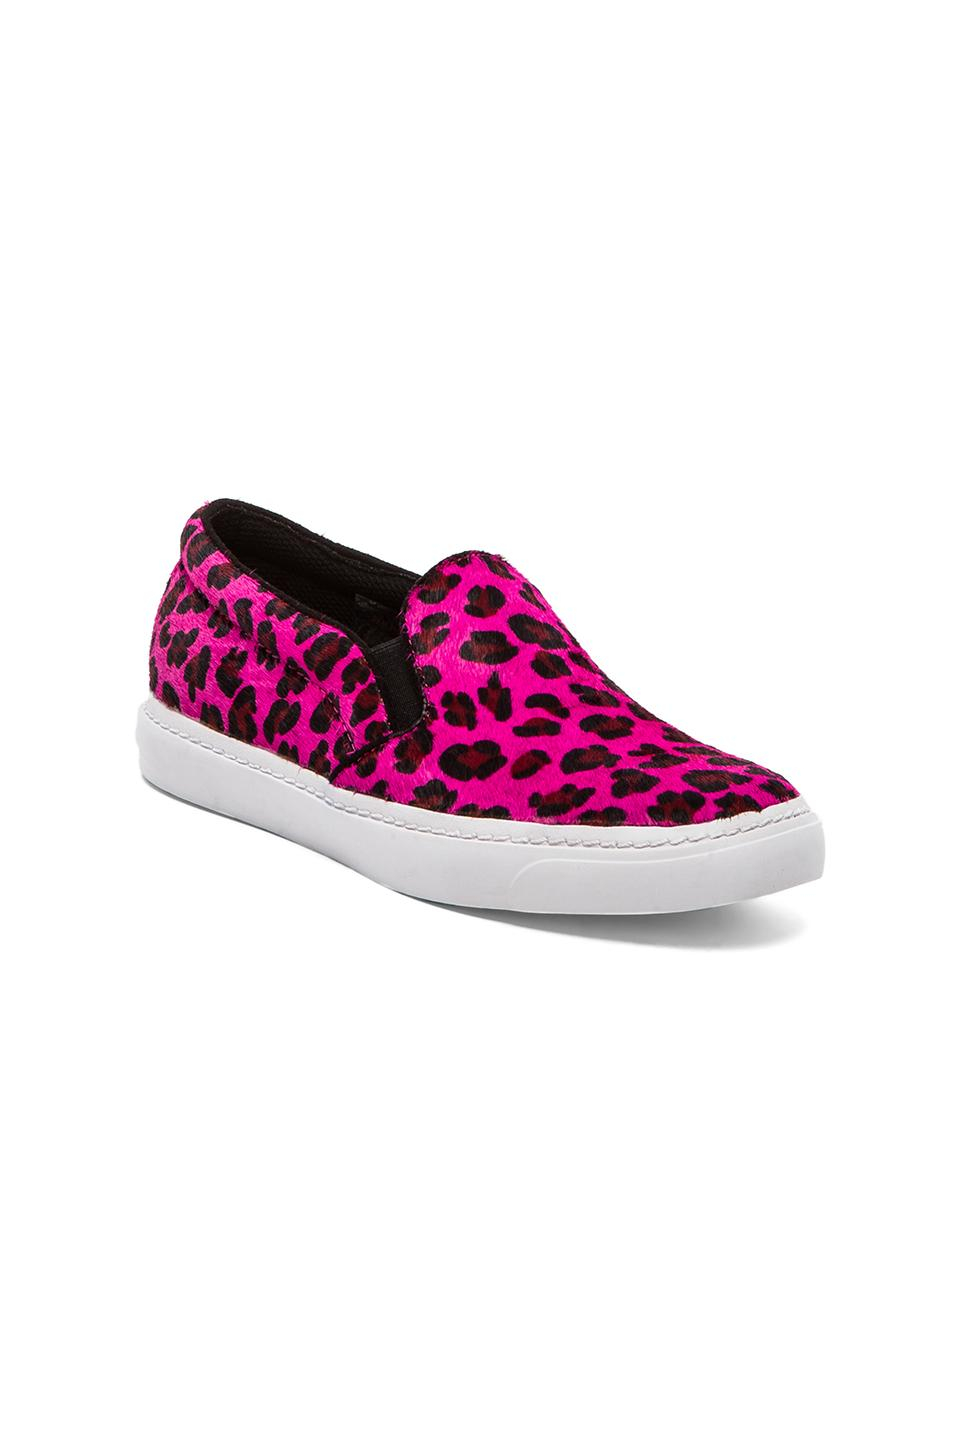 Jeffrey Campbell Alva Sneaker in Red Cheetah (Pink) - Lyst